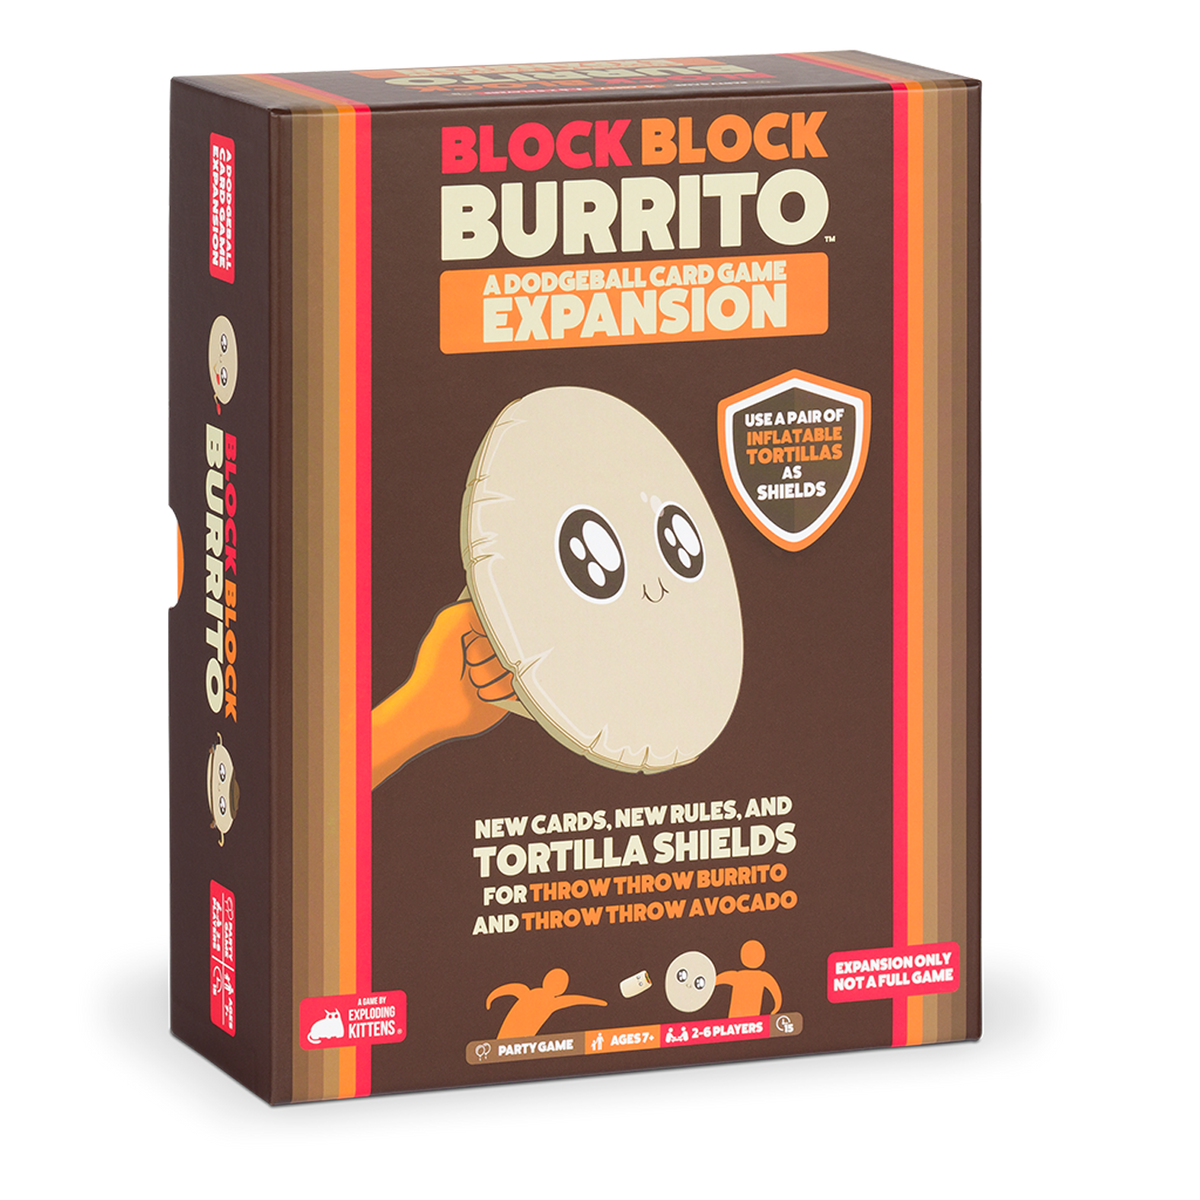 Throw Throw Burrito - Extreme Outdoor Edition Board Game - Asmodee Italia